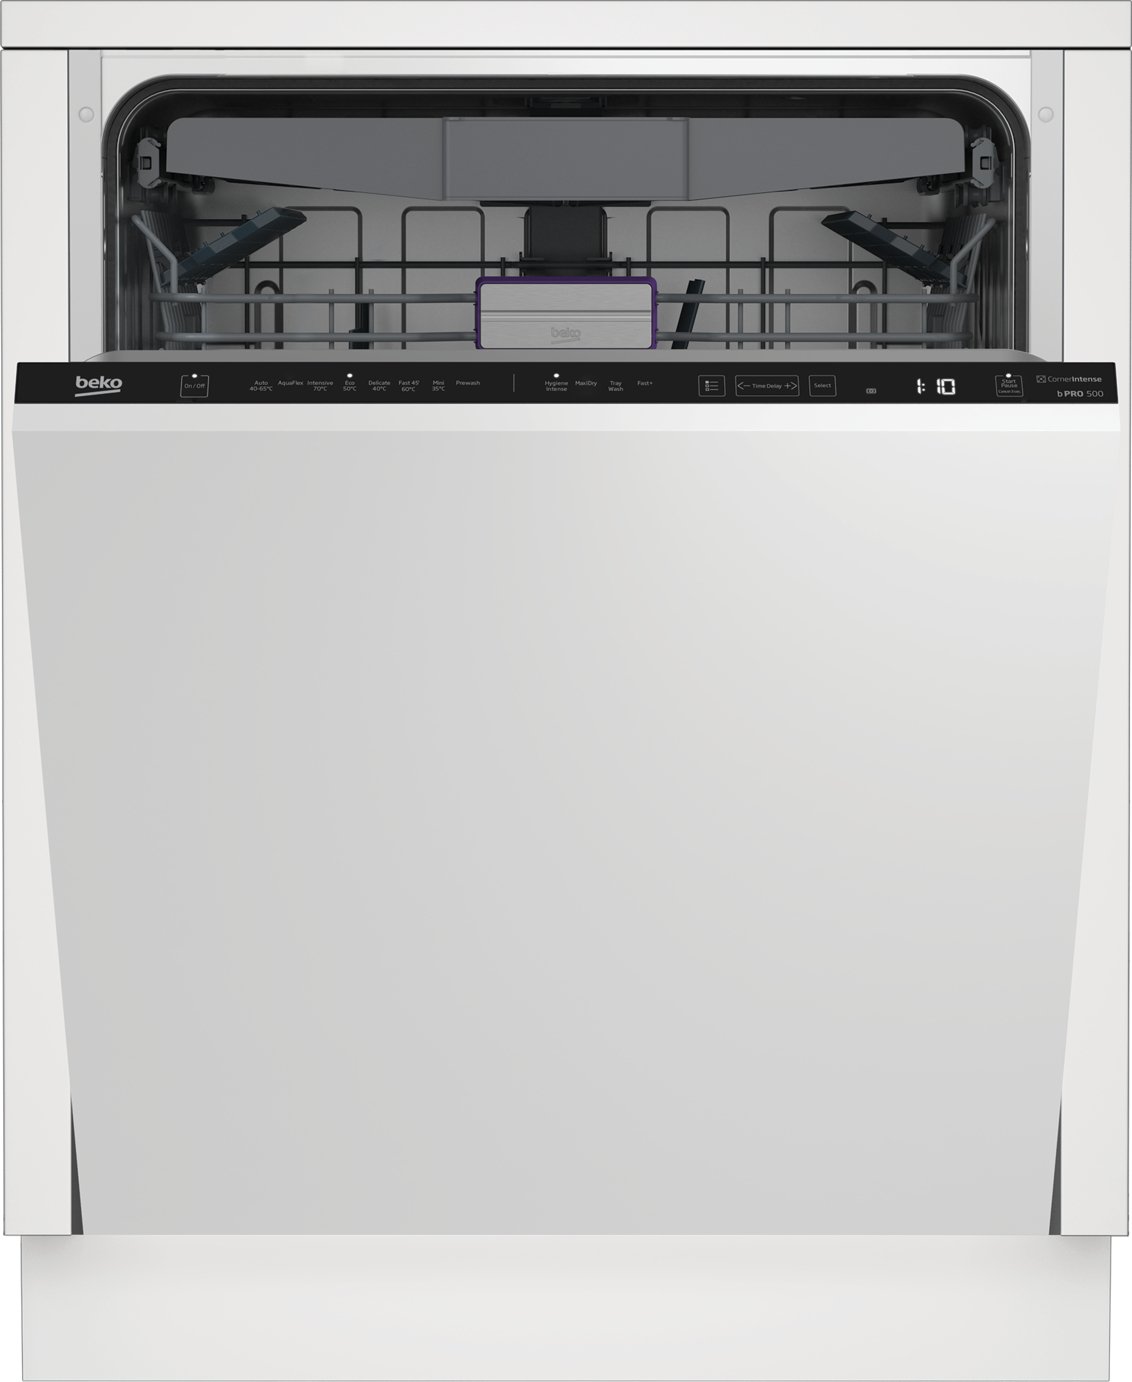 Beko BDIN38640F Full Size Integrated Dishwasher